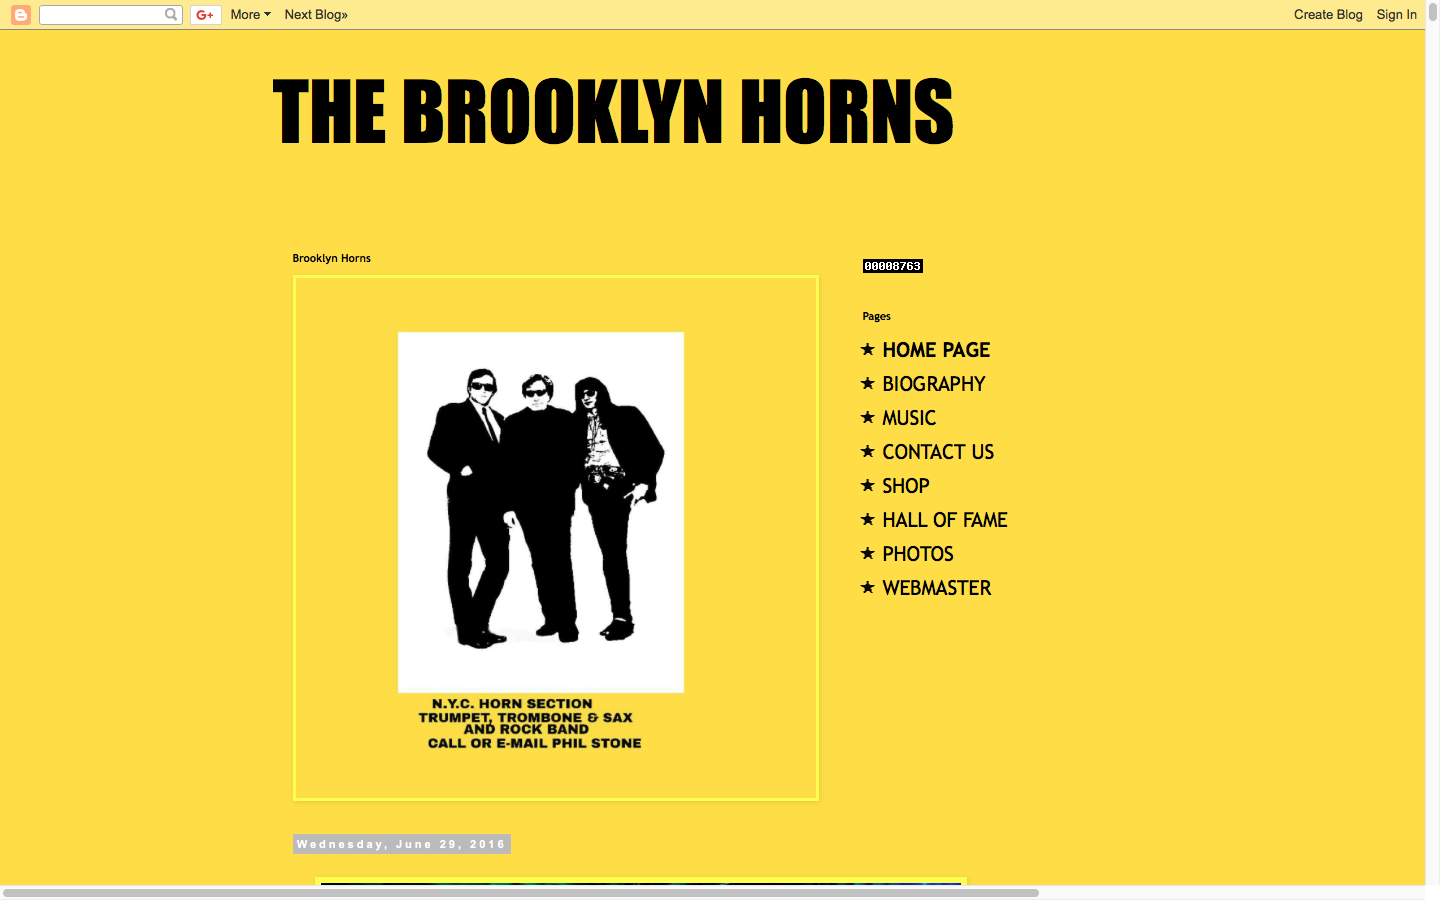 The Brooklyn Horns